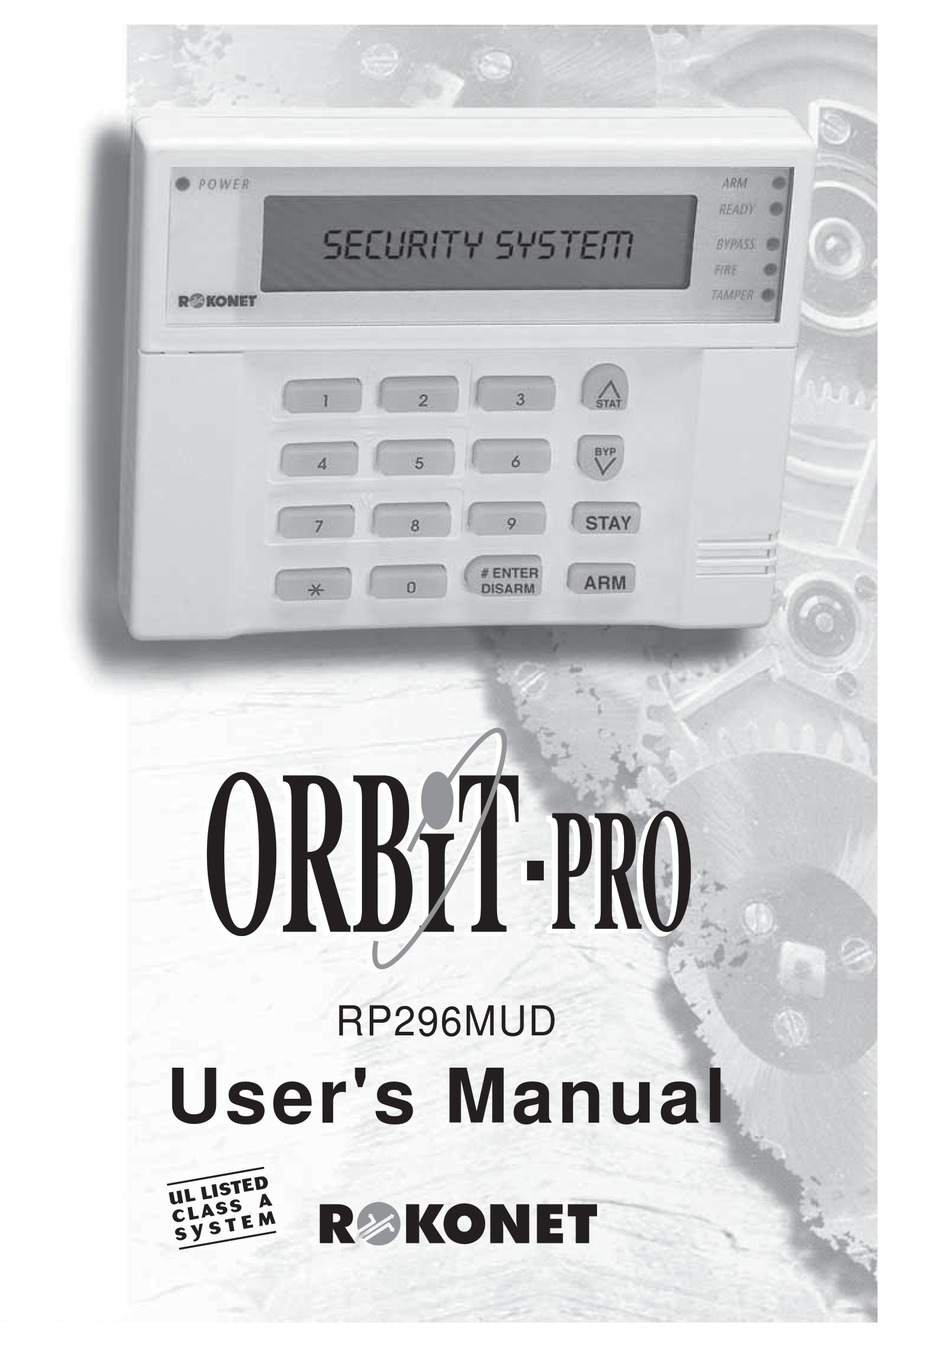 ROKONET ORBIT-PRO RP296MUD USER MANUAL Pdf Download | ManualsLib